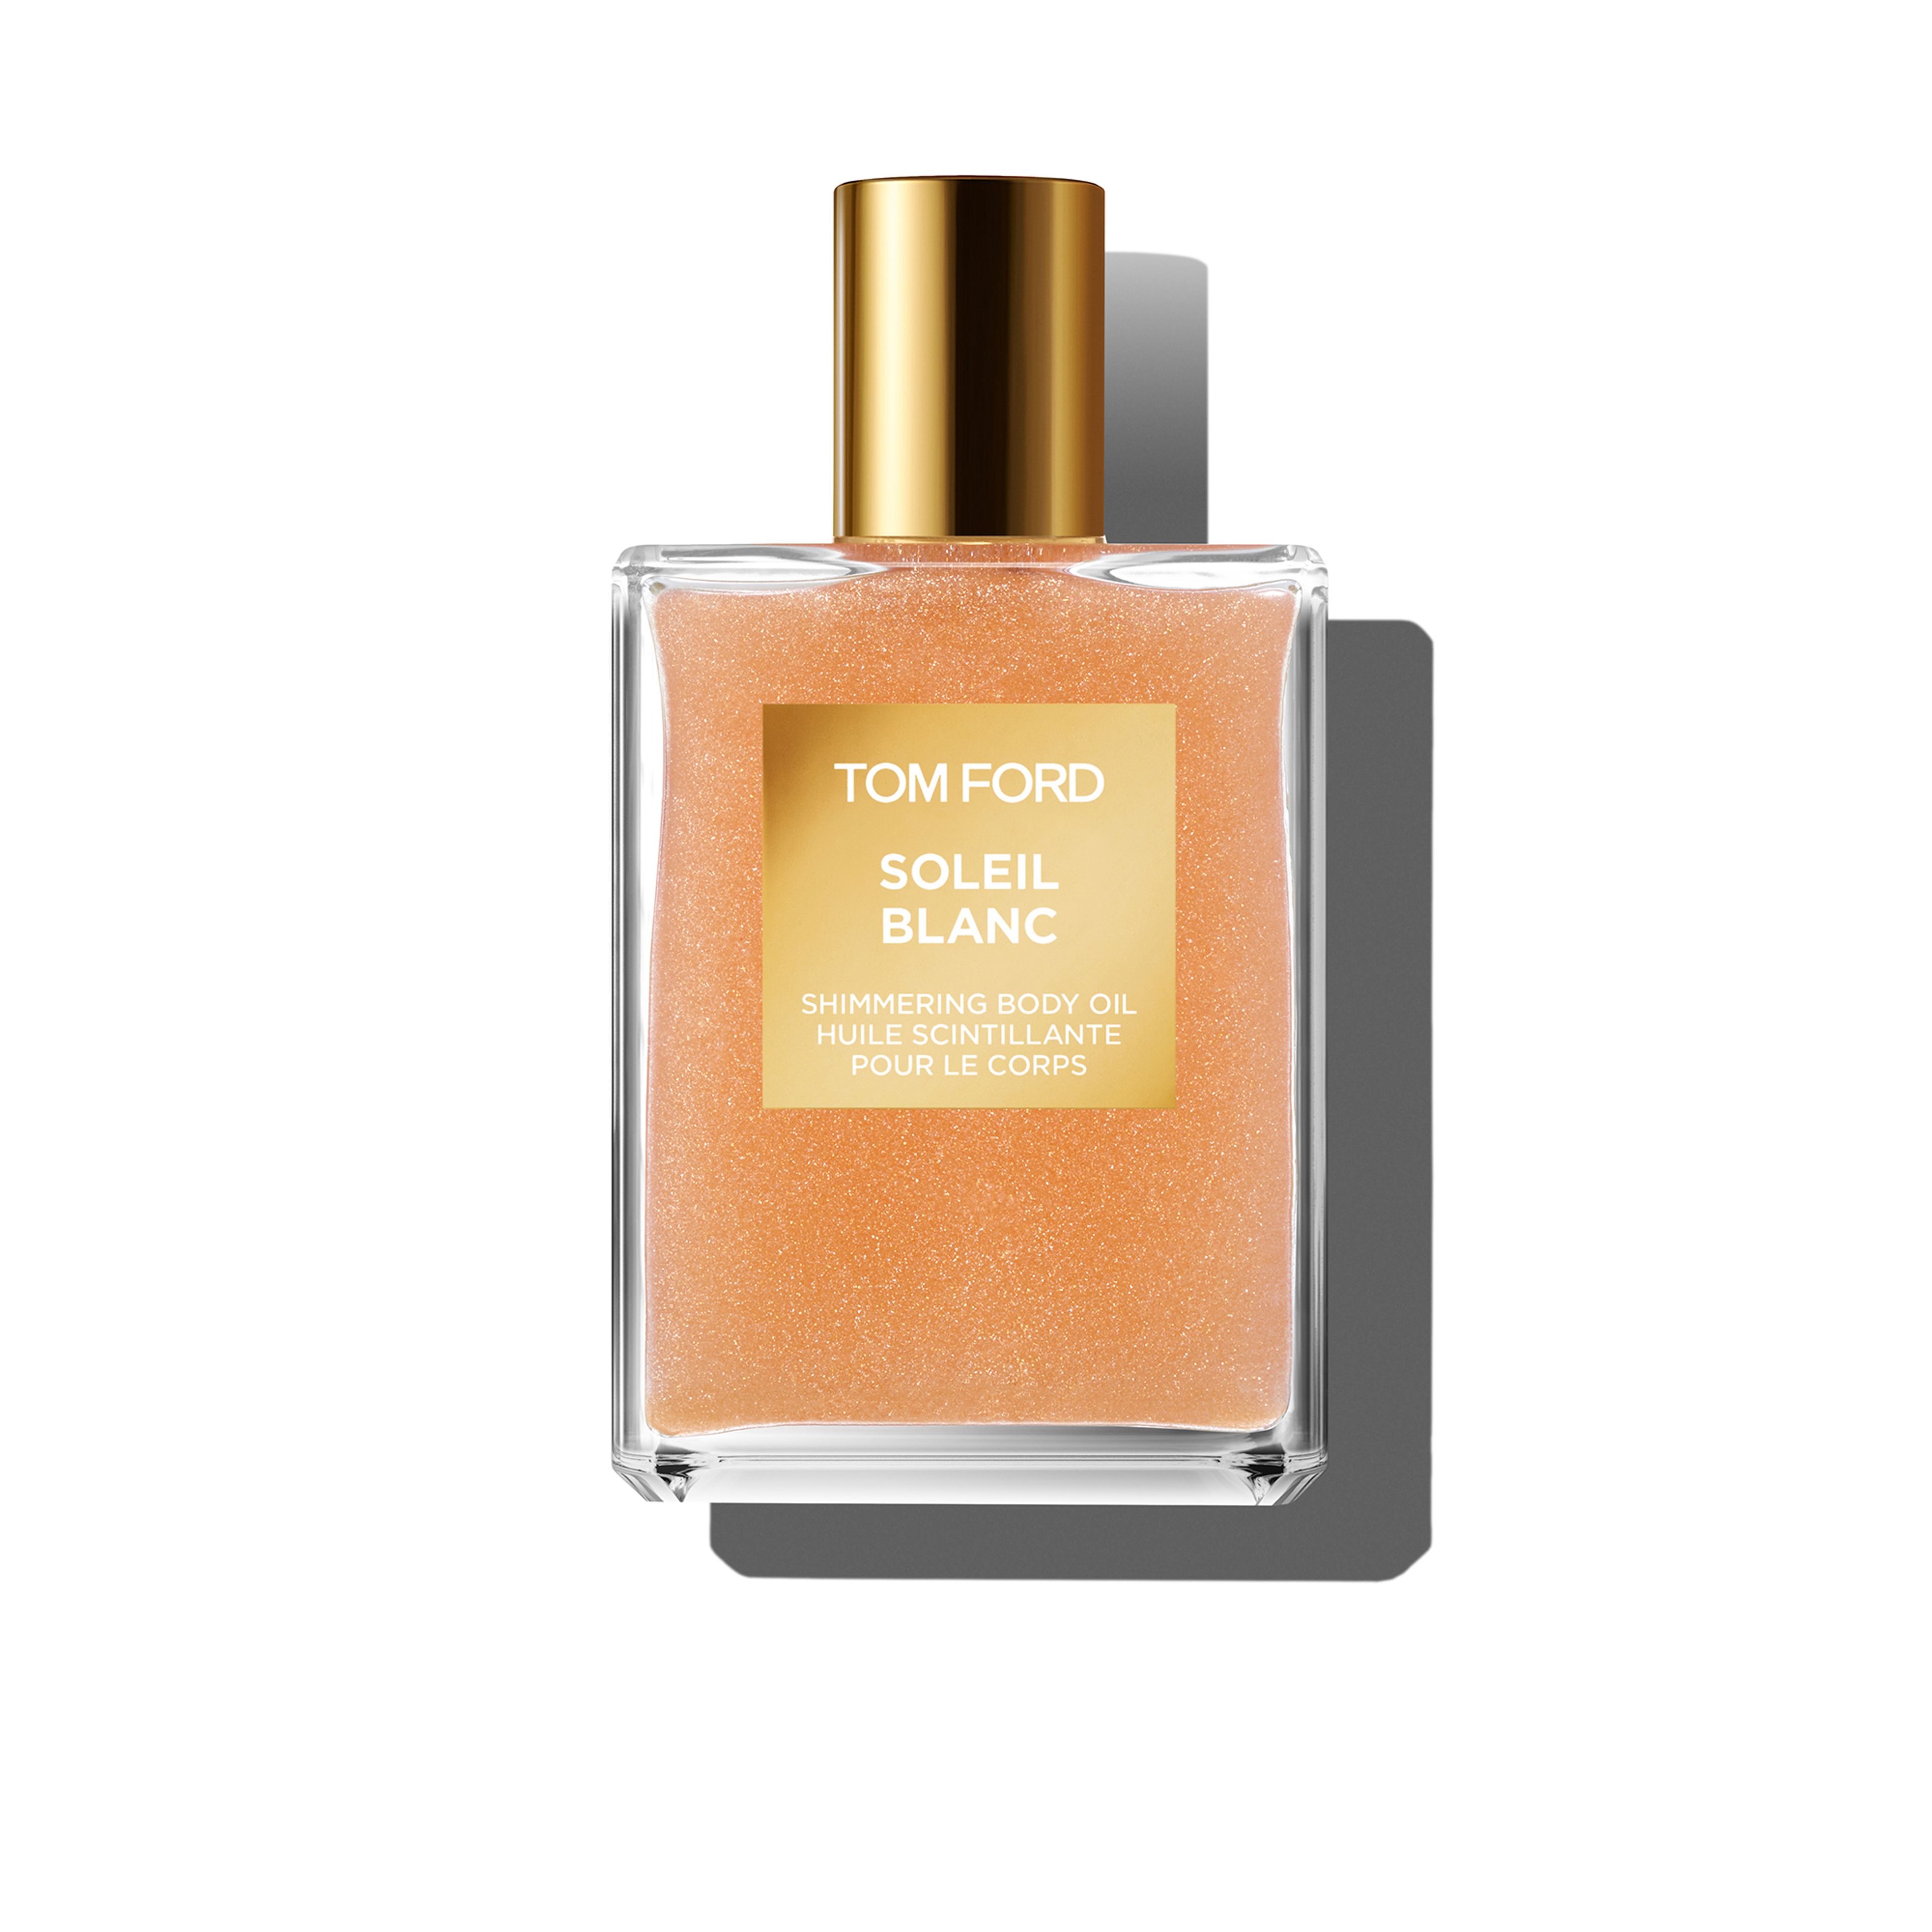 Tom Ford Soleil Blanc Shimmering Body Oil

shade: Rose Gold 3